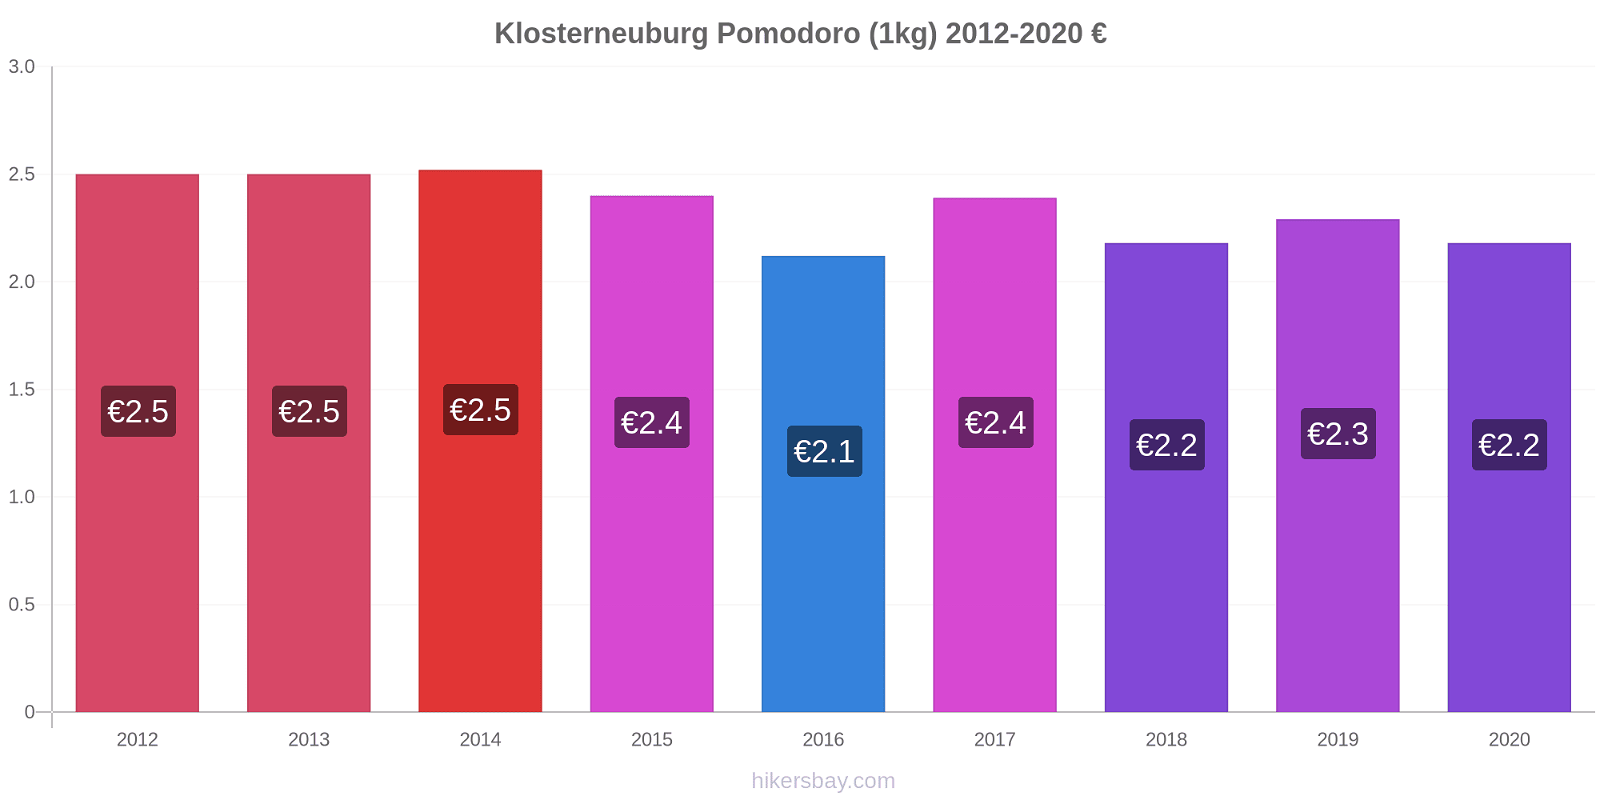 Klosterneuburg variazioni di prezzo Pomodoro (1kg) hikersbay.com